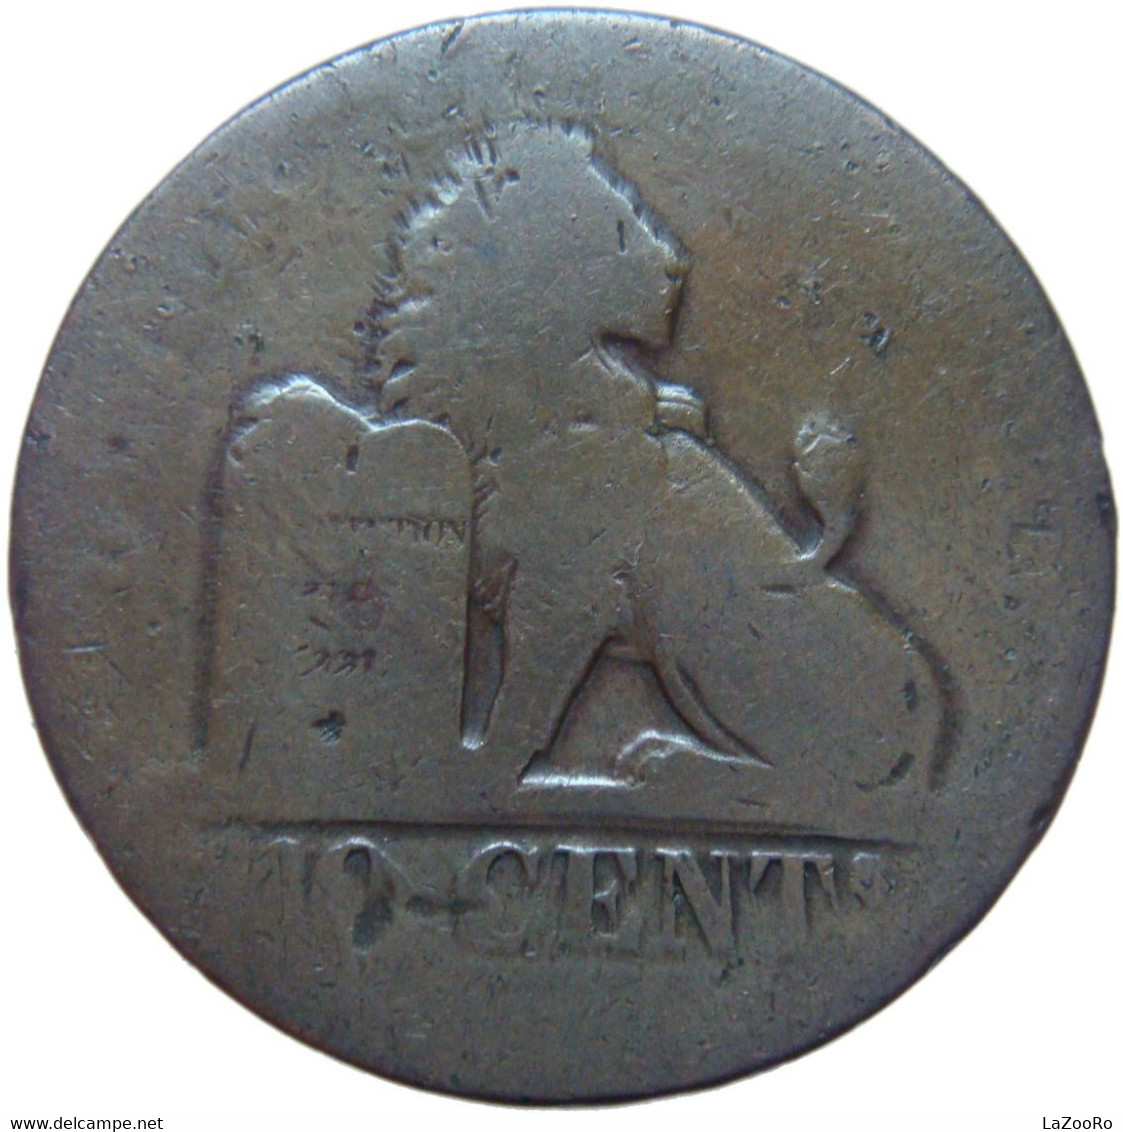 LaZooRo: Belgium 10 Centimes 1833 VG / F - 10 Cents